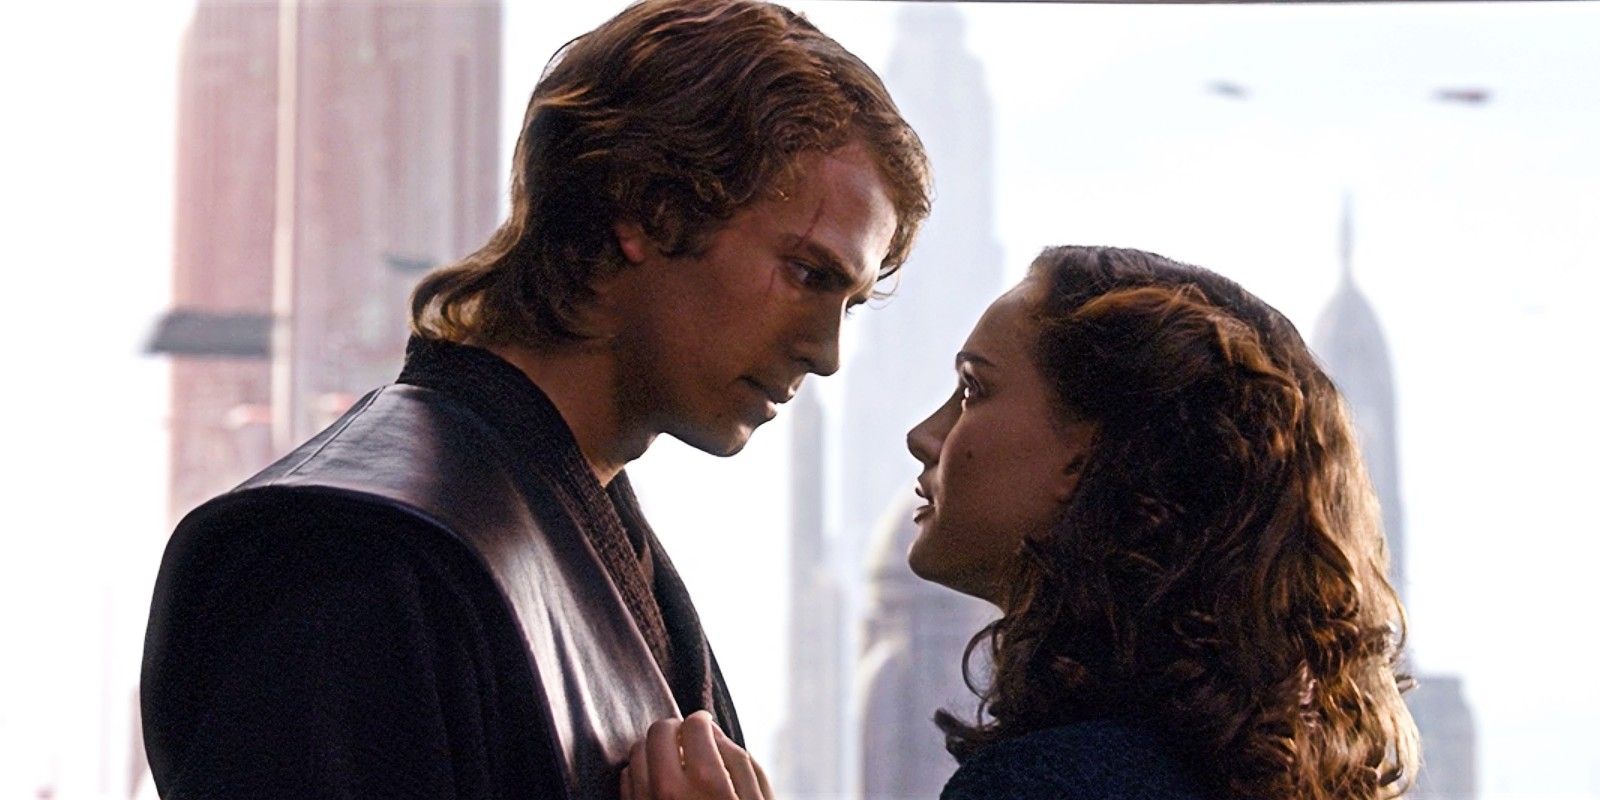 Natalie Portman as Padme and Hayden Christensen as Anakin Skywalker in Star Wars Revenge of the Sith